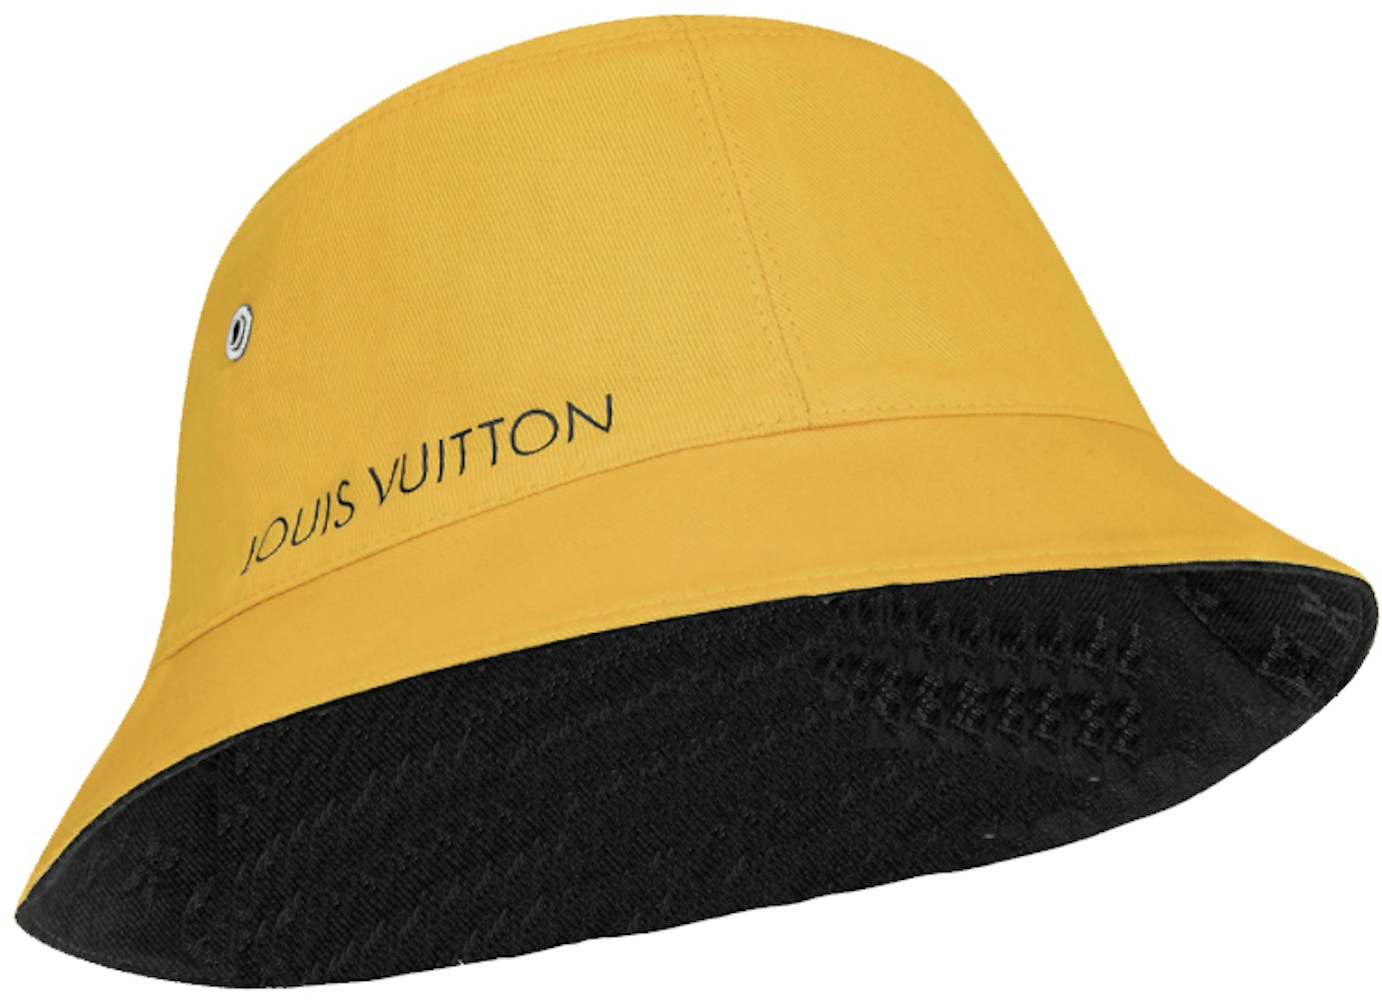 Louis Vuitton Monogram Denim Bob Bucket Hat Black/Yellow in Cotton